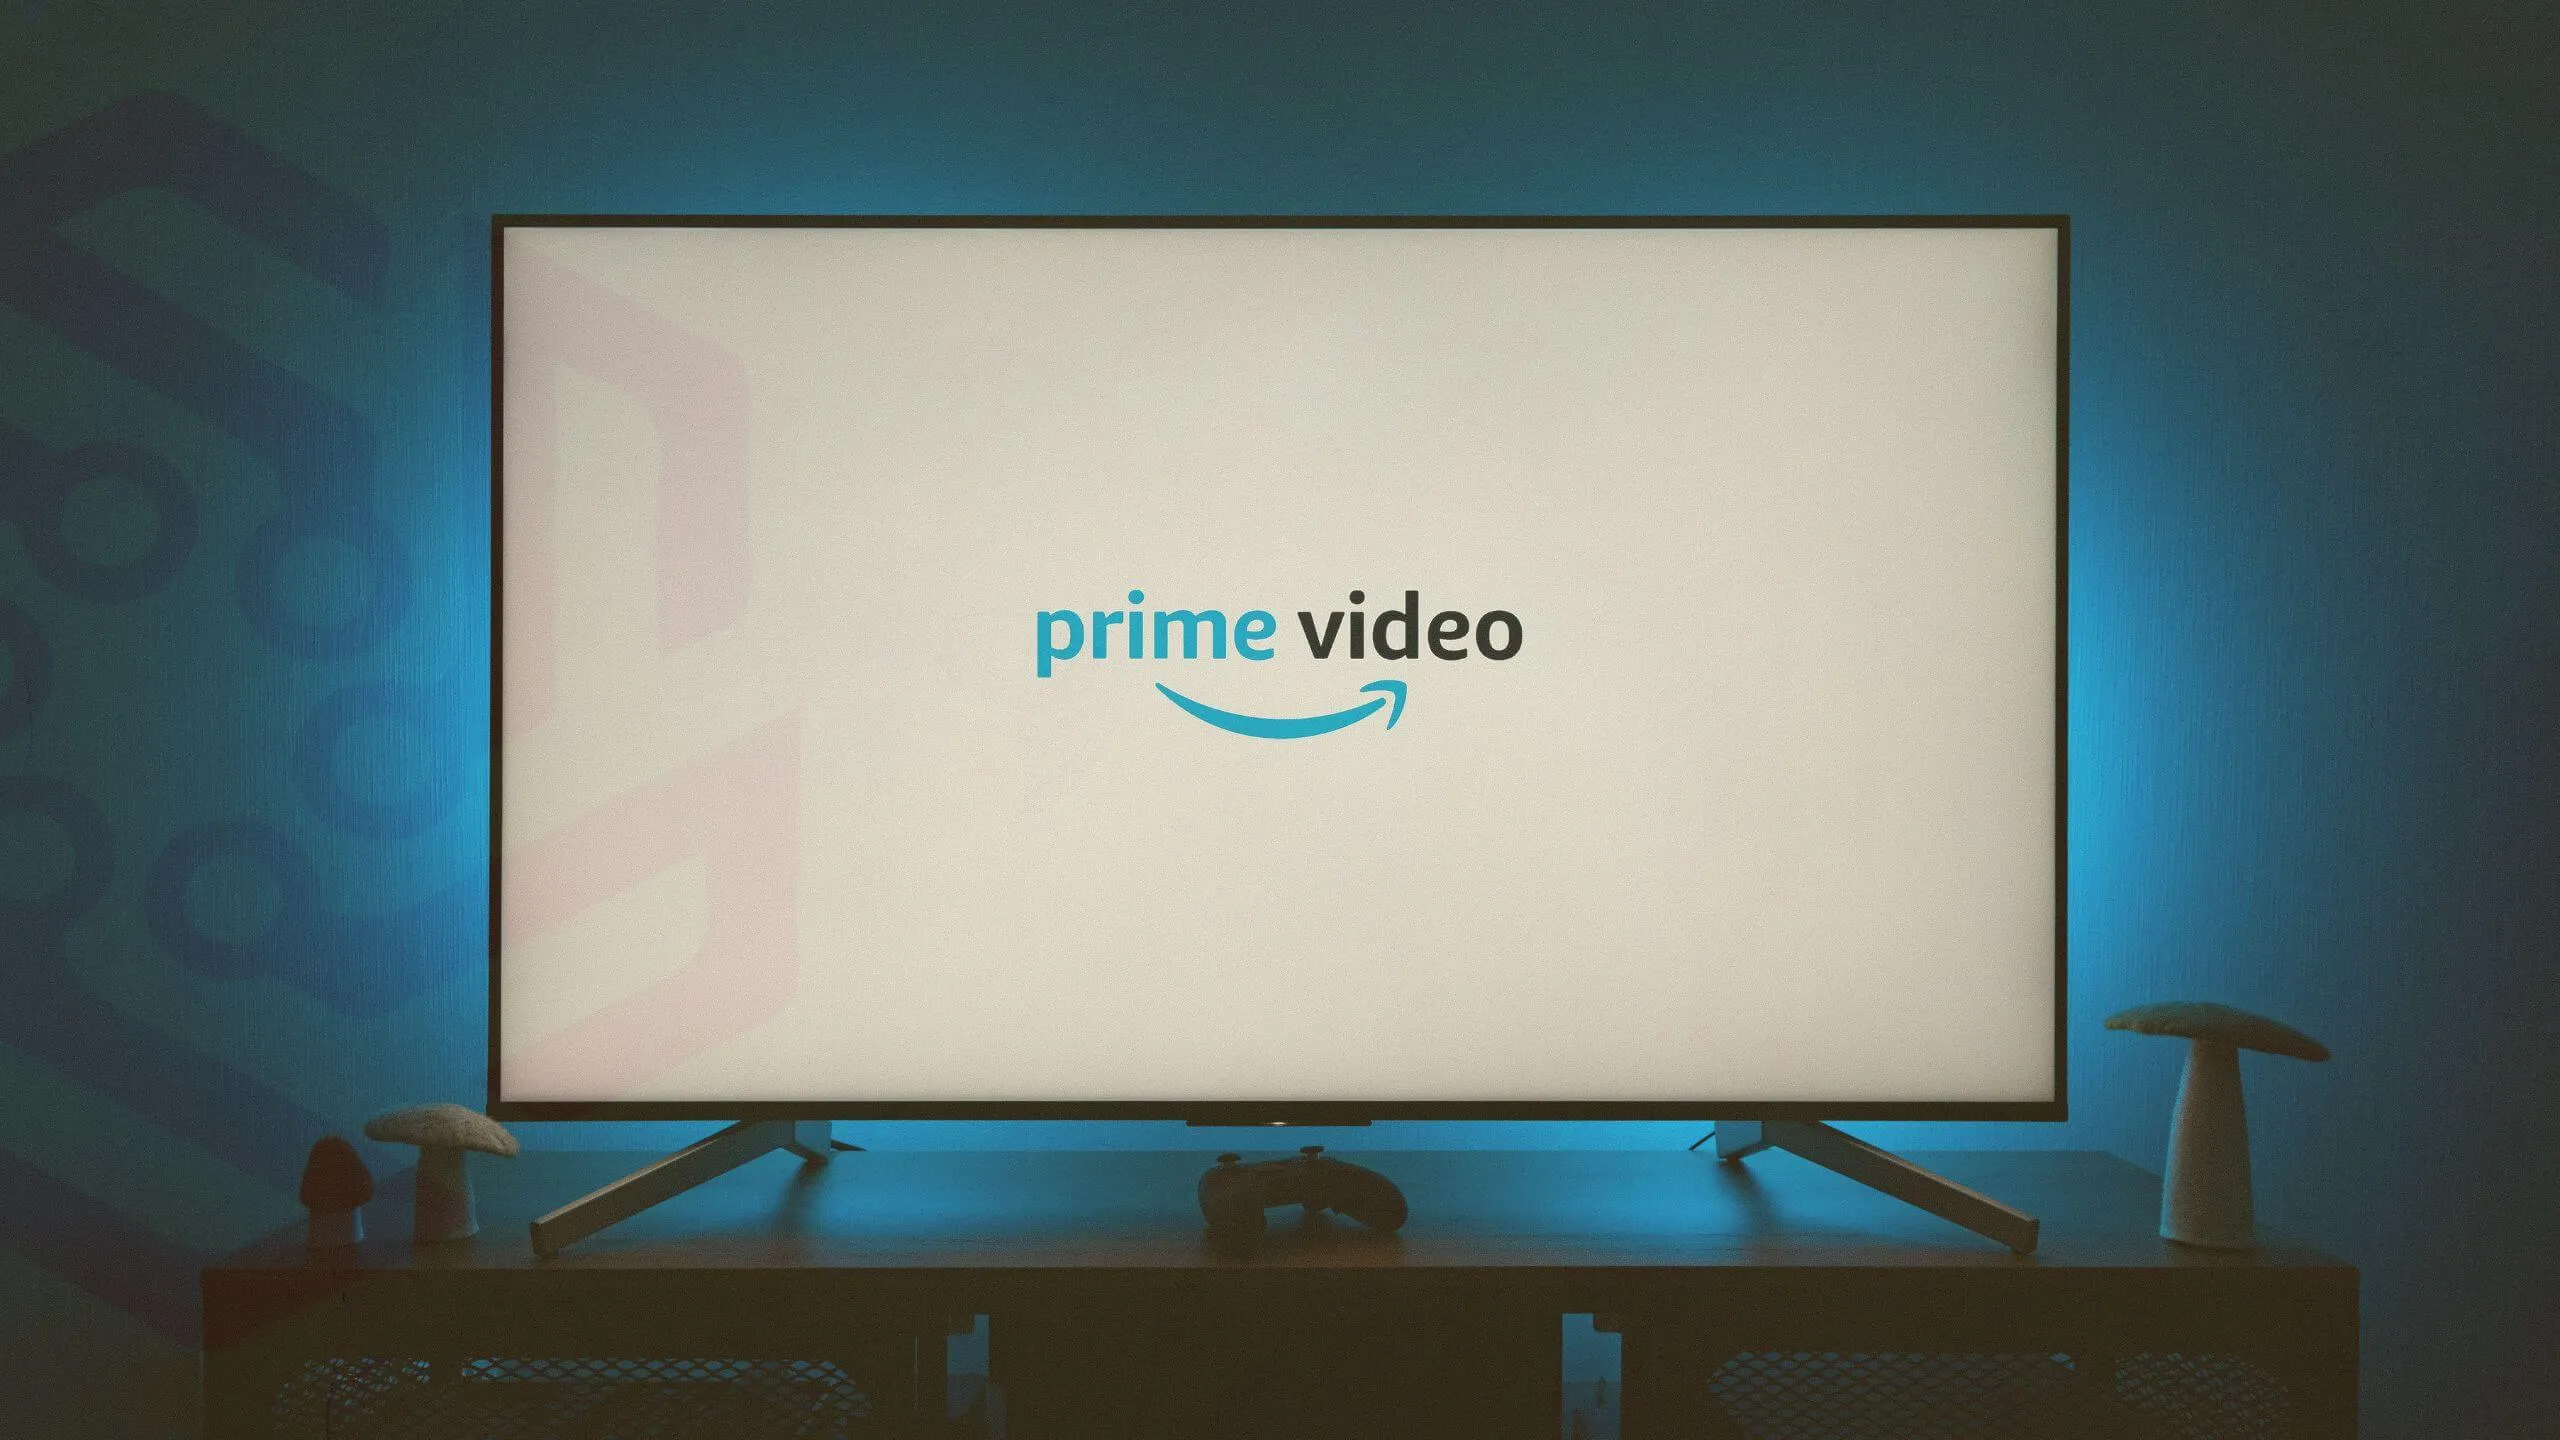 Amazon Prime Video Ads